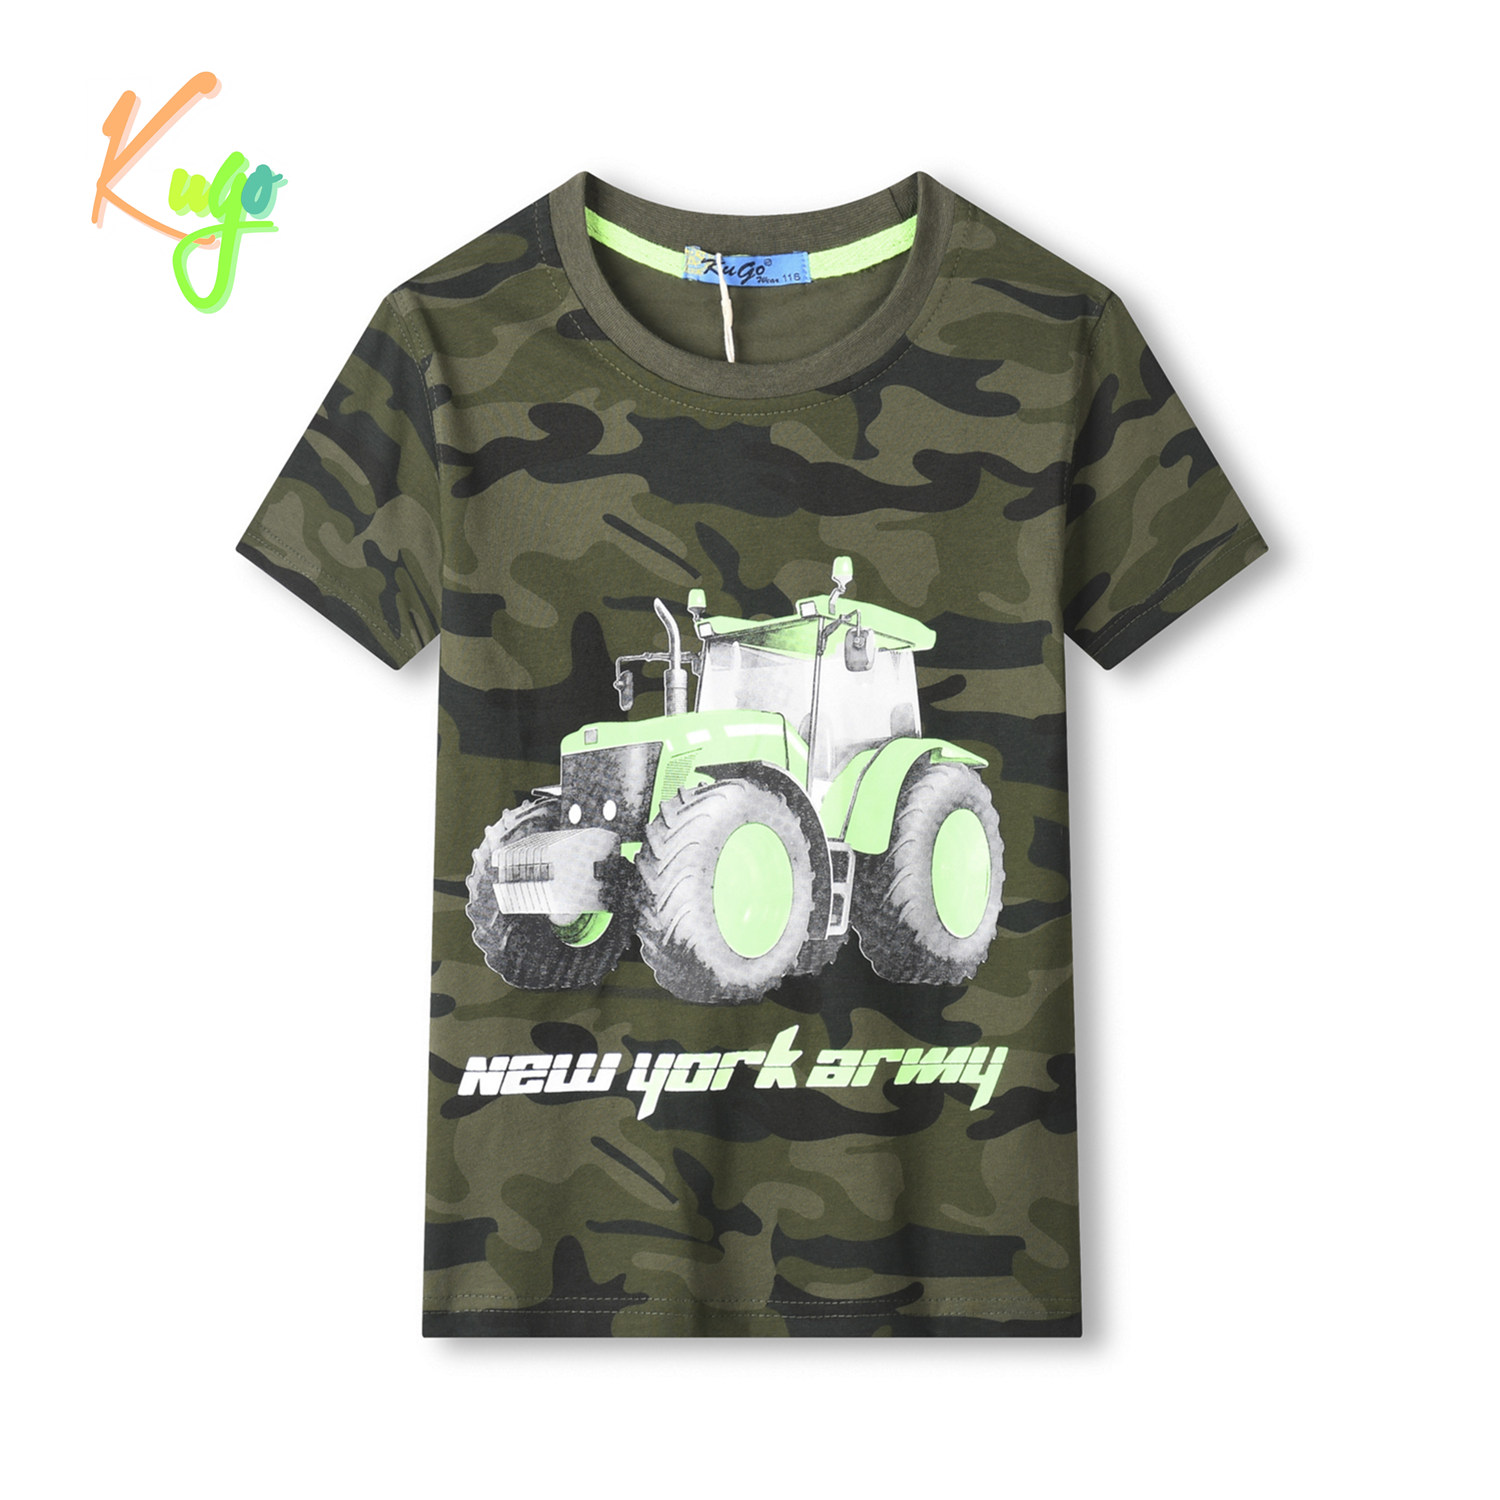 Chlapecké triko - KUGO TM9216, khaki/ zelený bagr Barva: Khaki, Velikost: 110